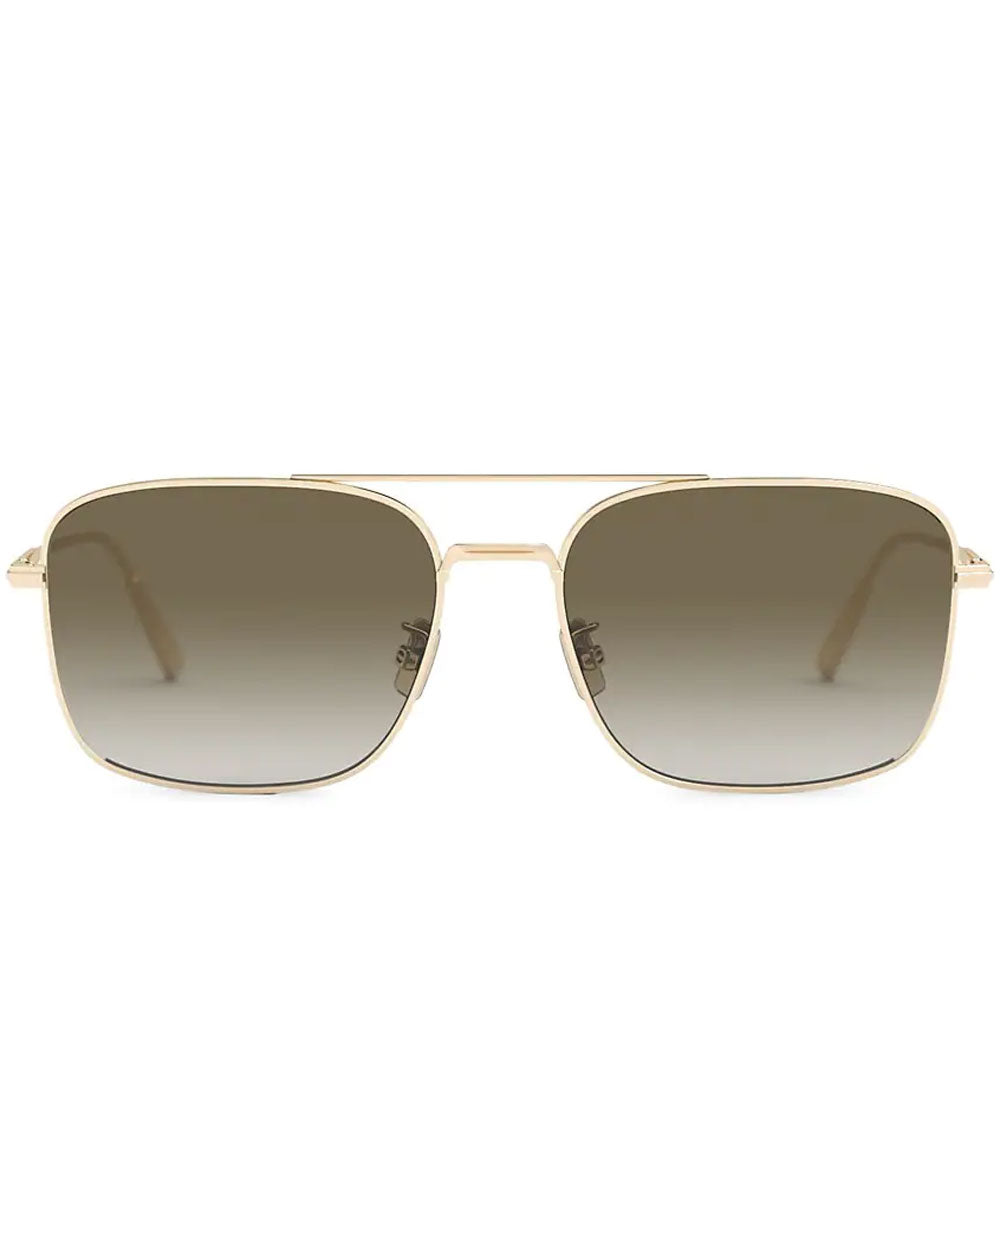 BlackSuit Aviator Sunglasses in Gold